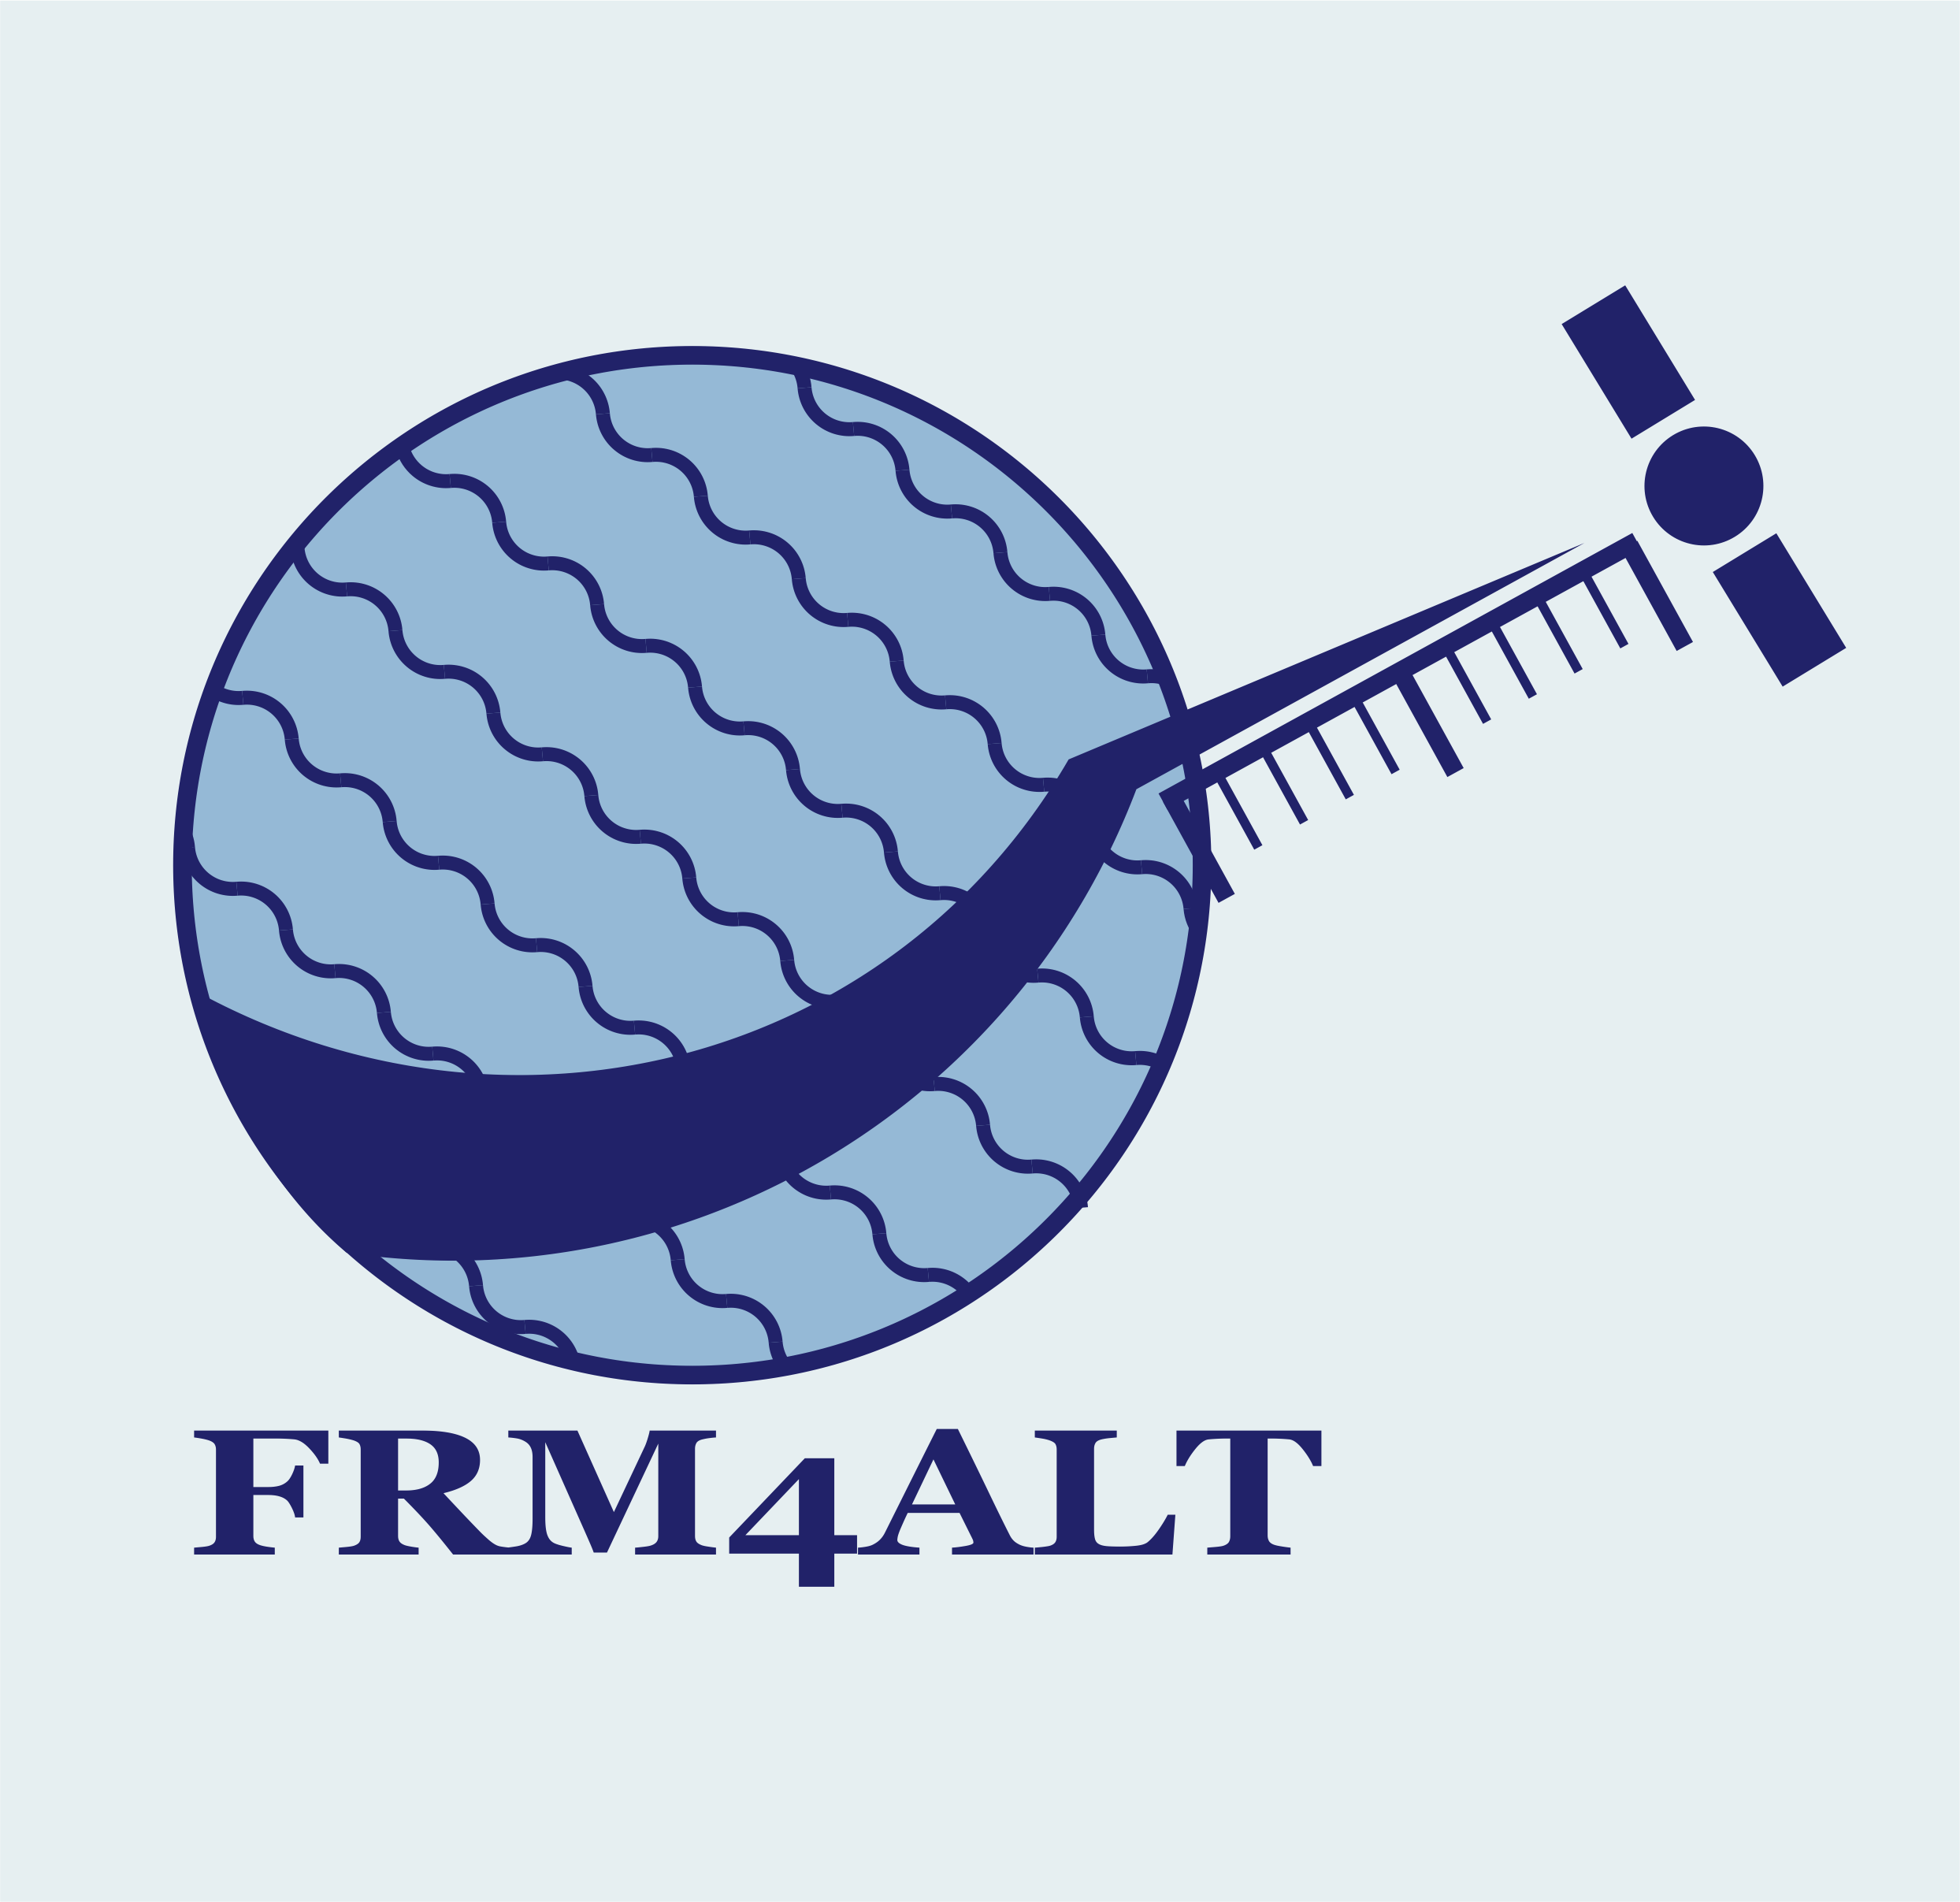 frm4alt logo 6 Dec 2017